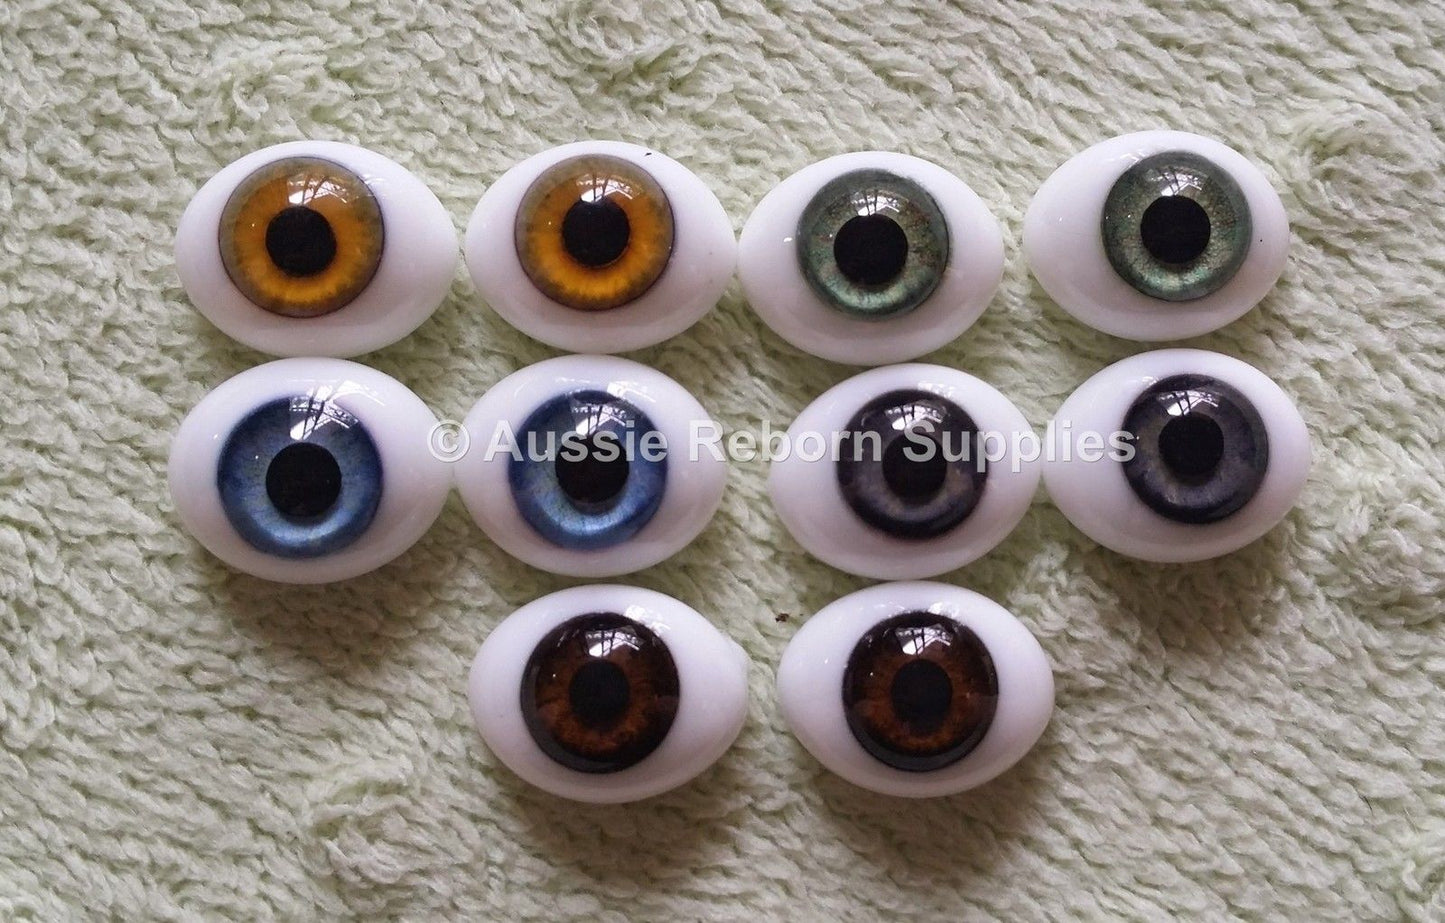 20mm Hazel Oval Glass Eyes Reborn Baby Doll Making Supplies